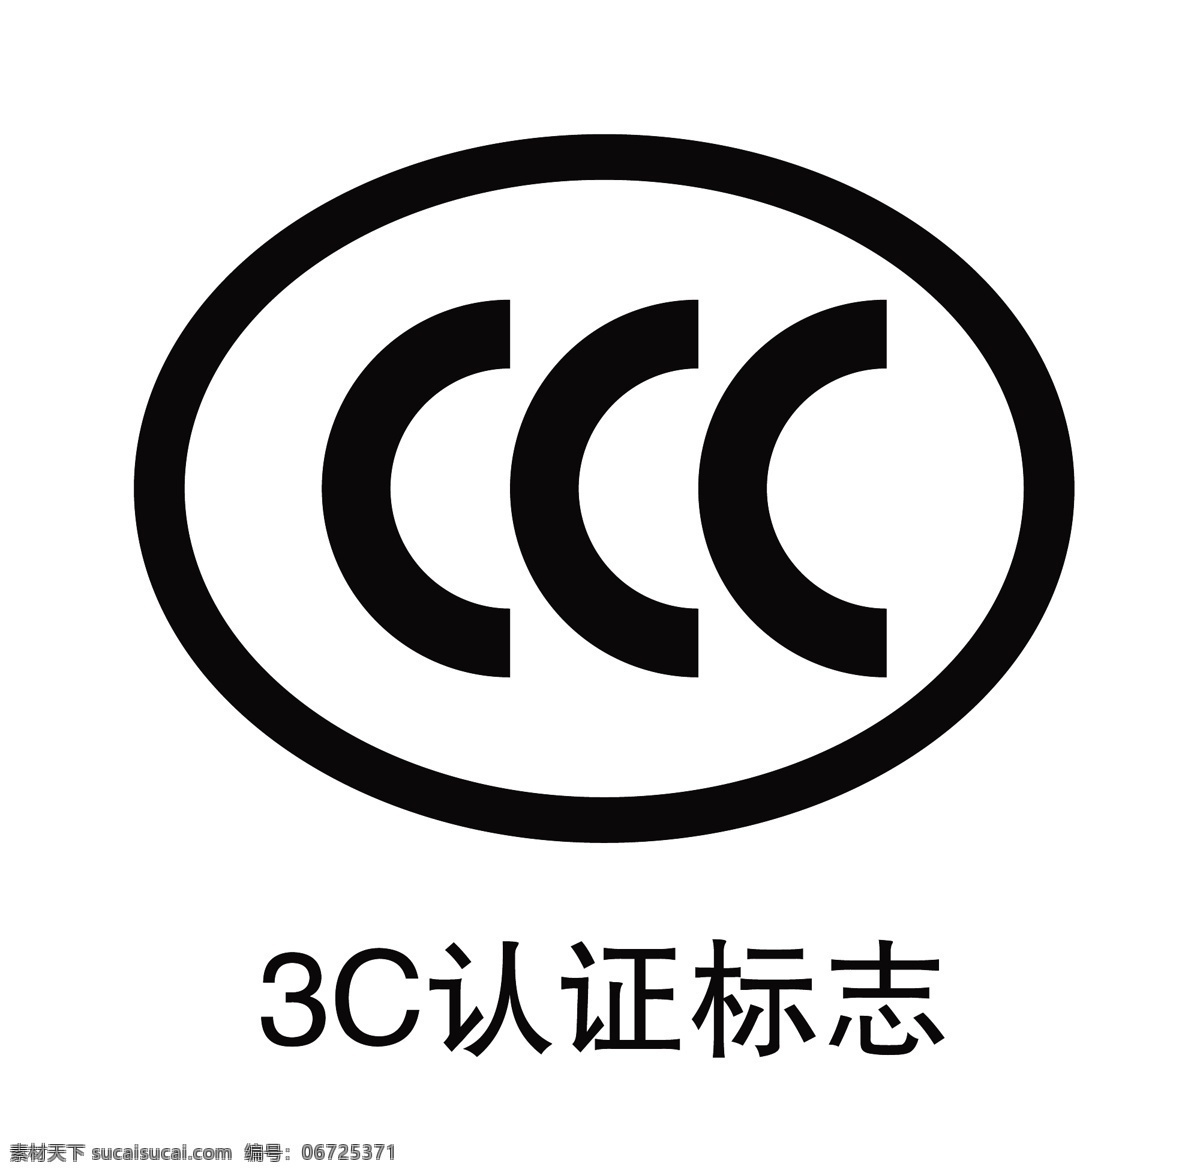 3c认证标志 最新3c标志 最新认证标志